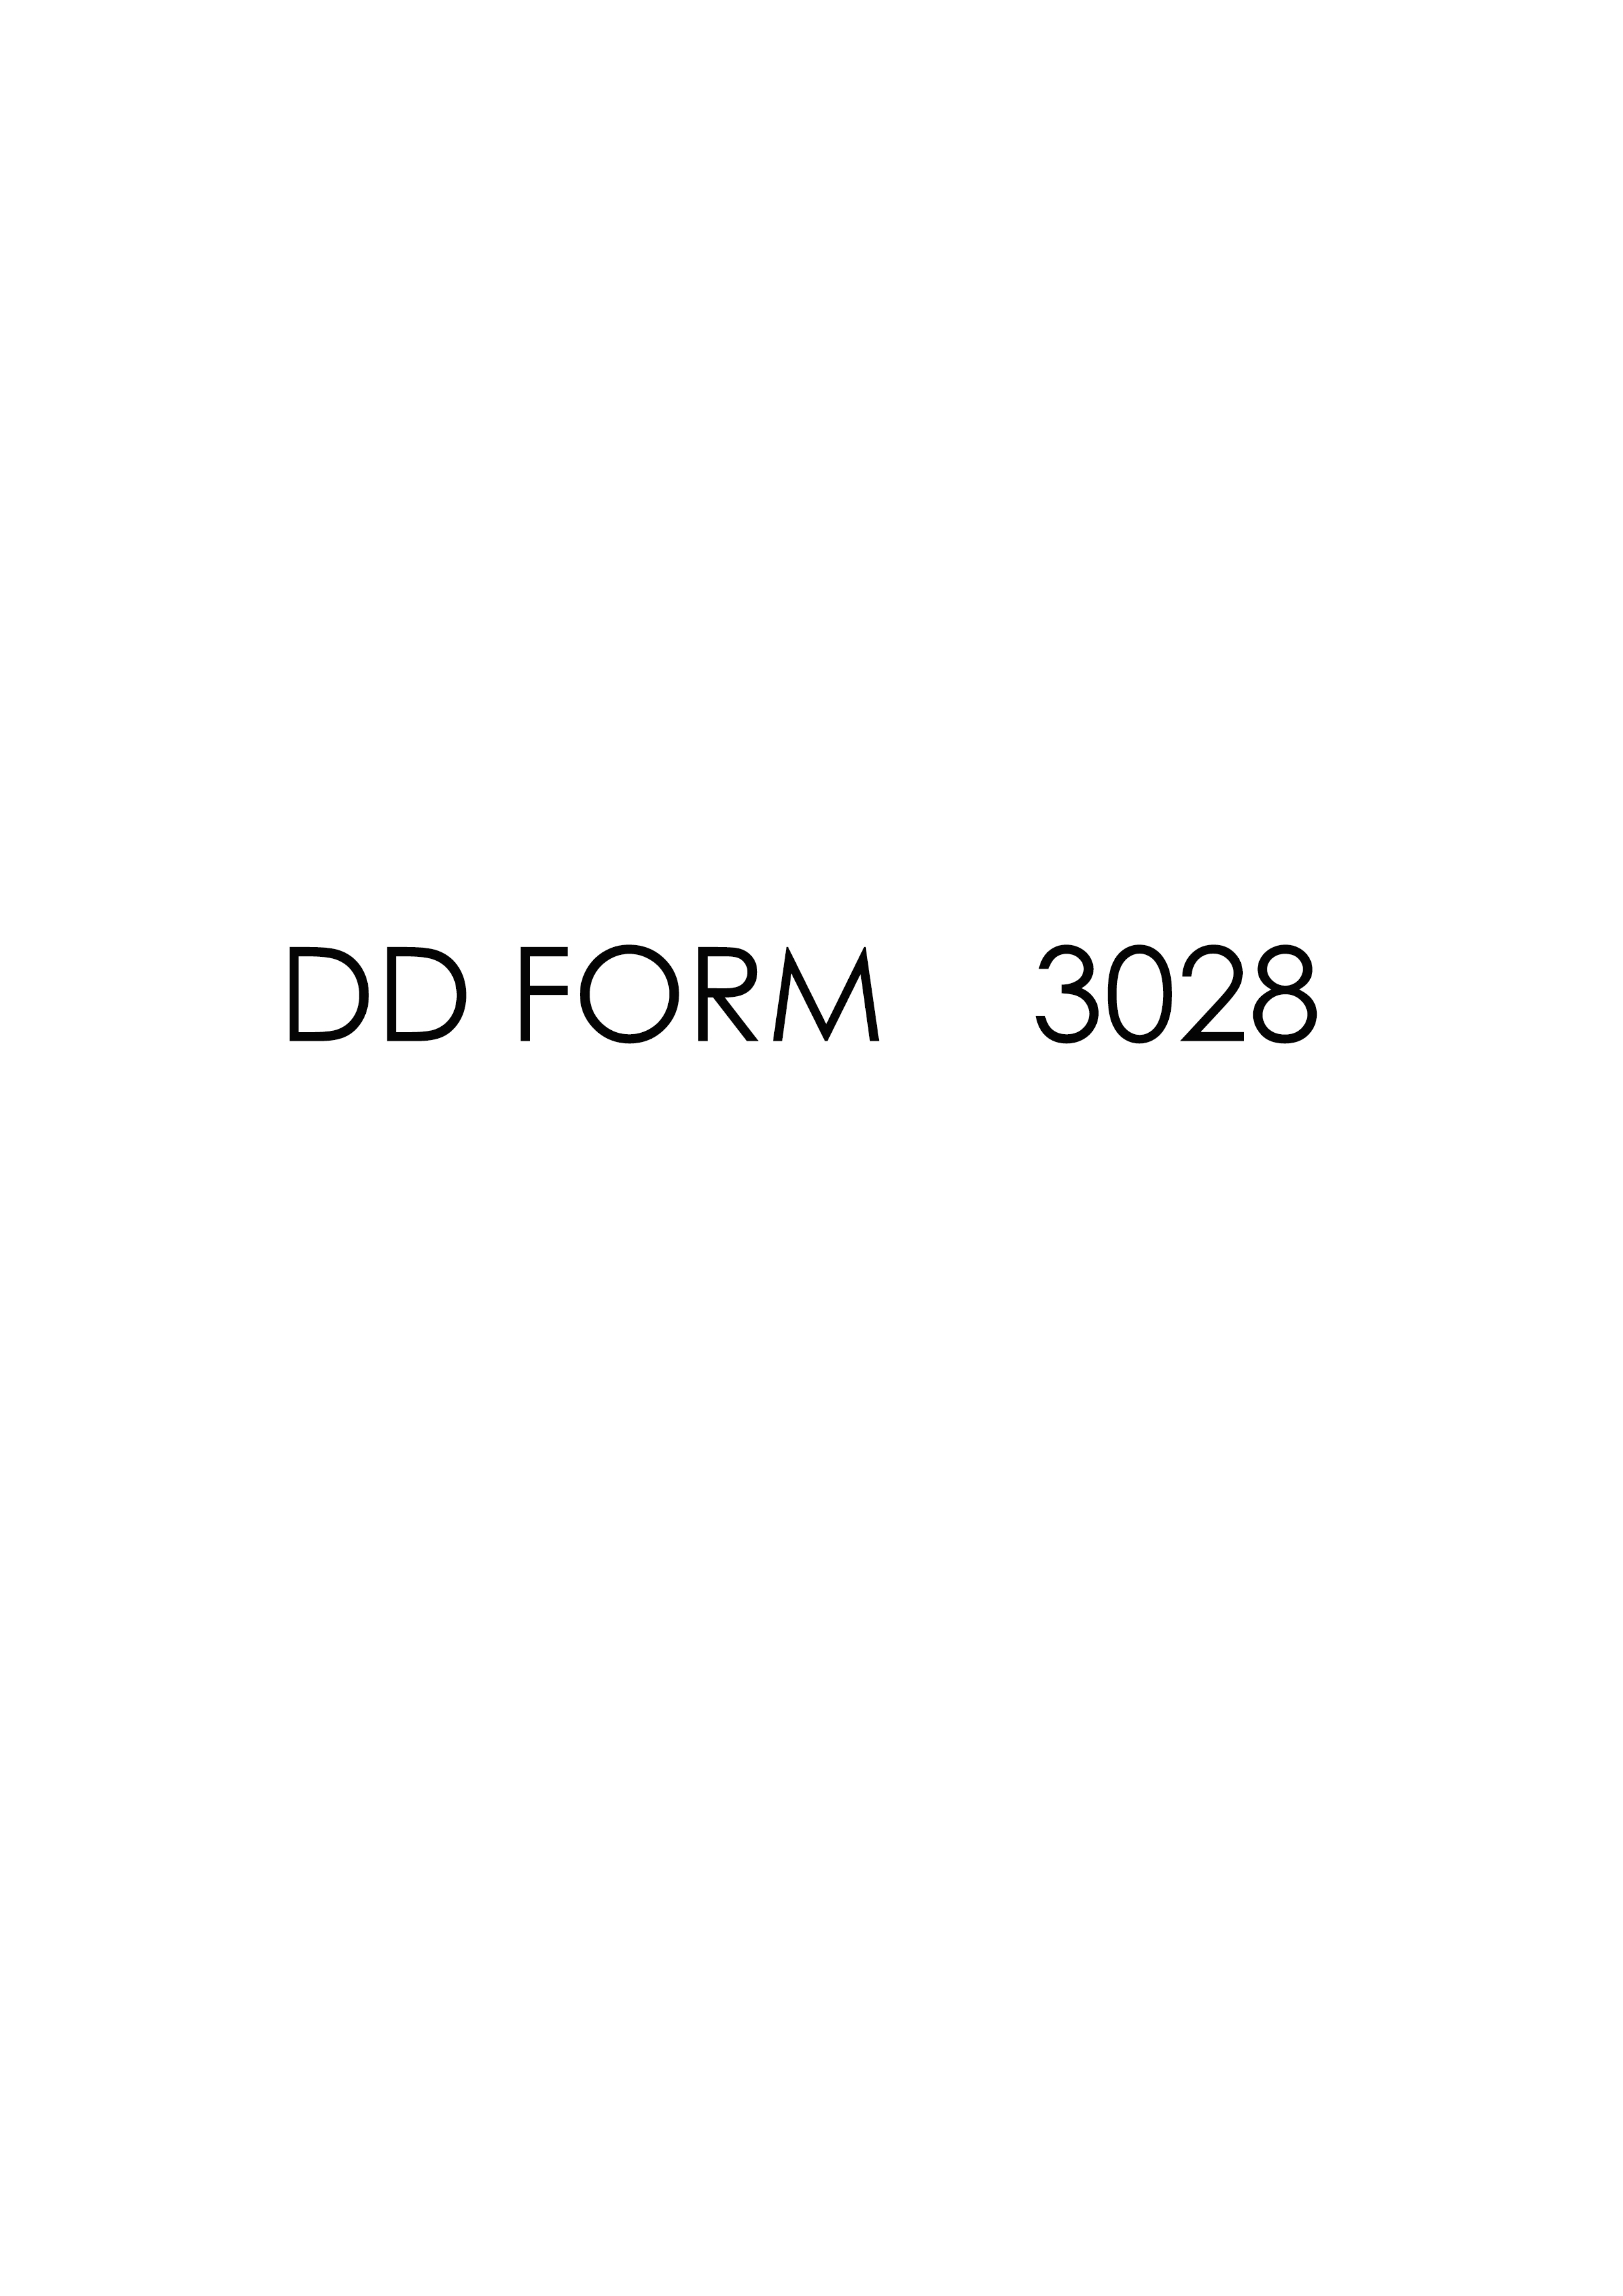 Download dd 3028 Form